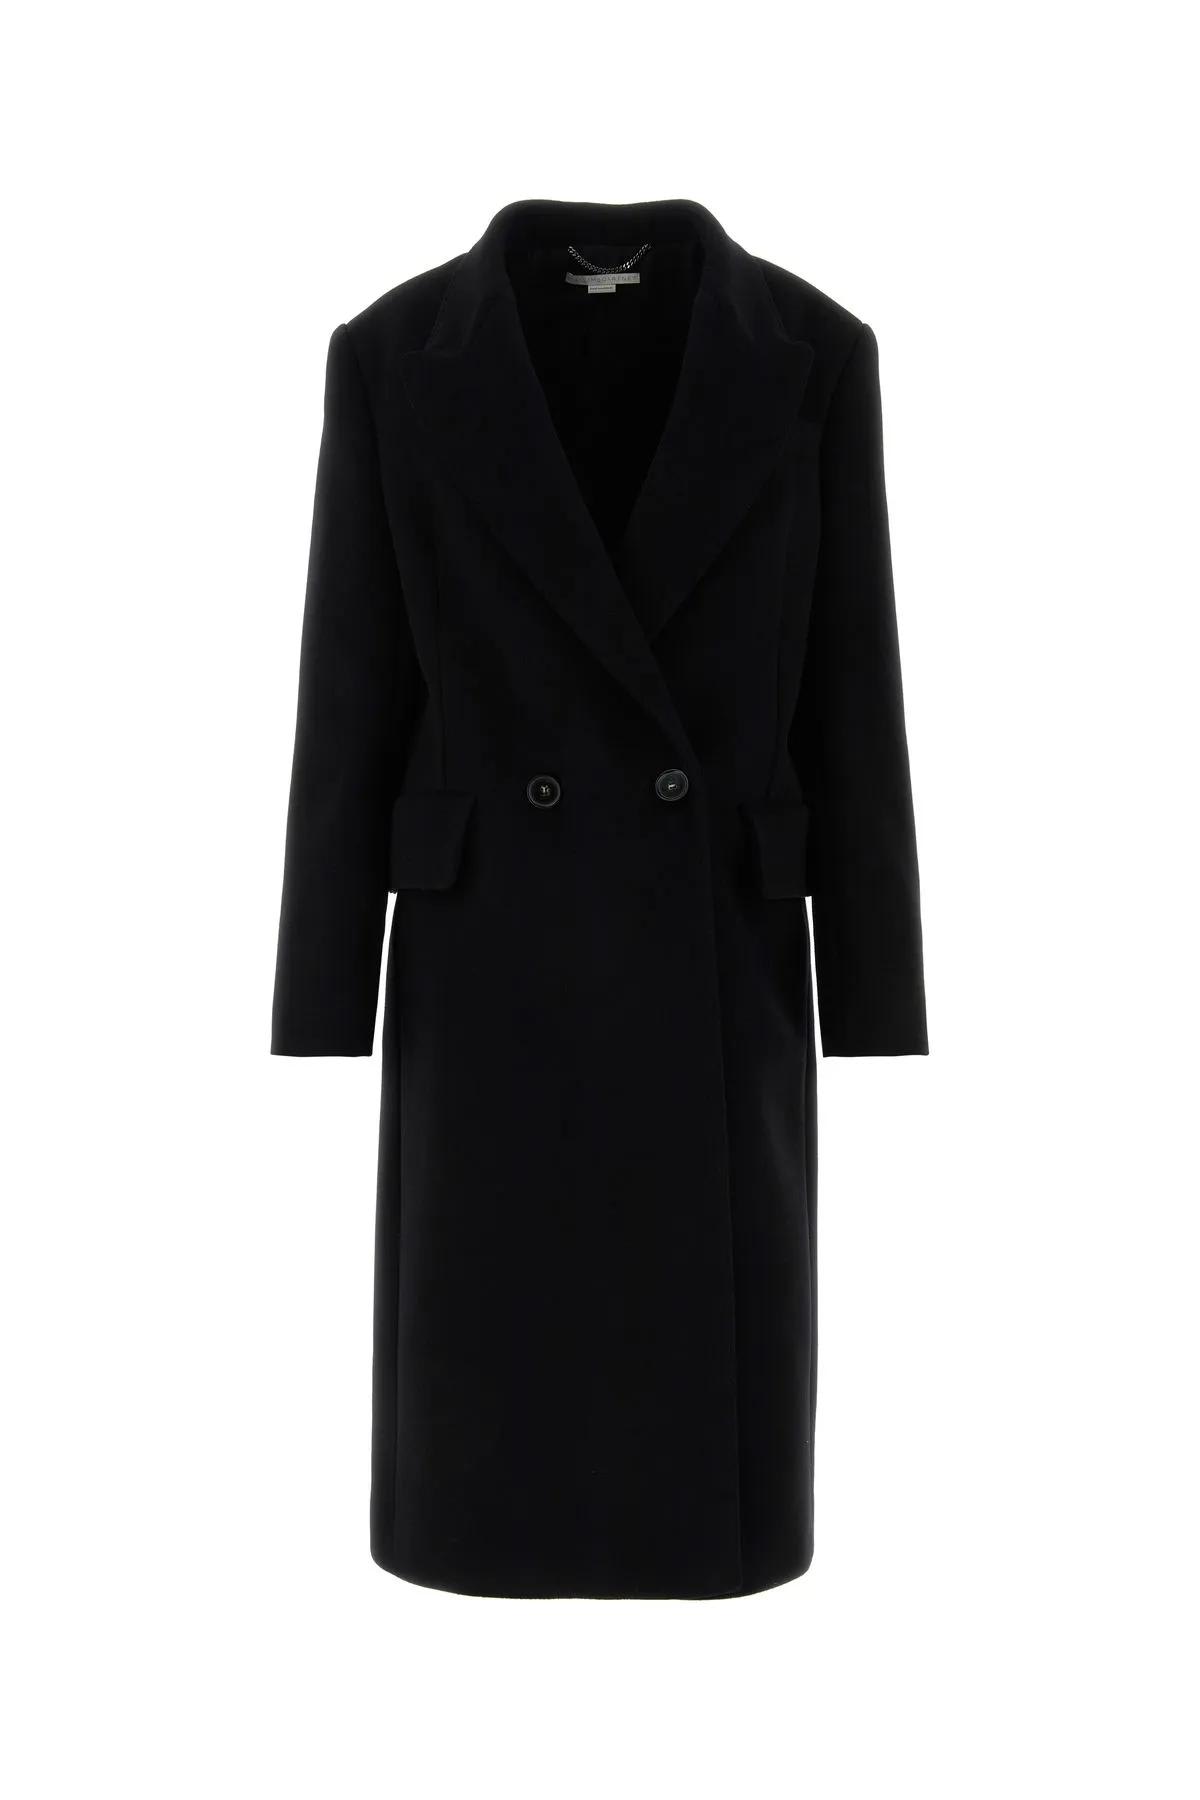 Stella Mccartney Black Wool Coat